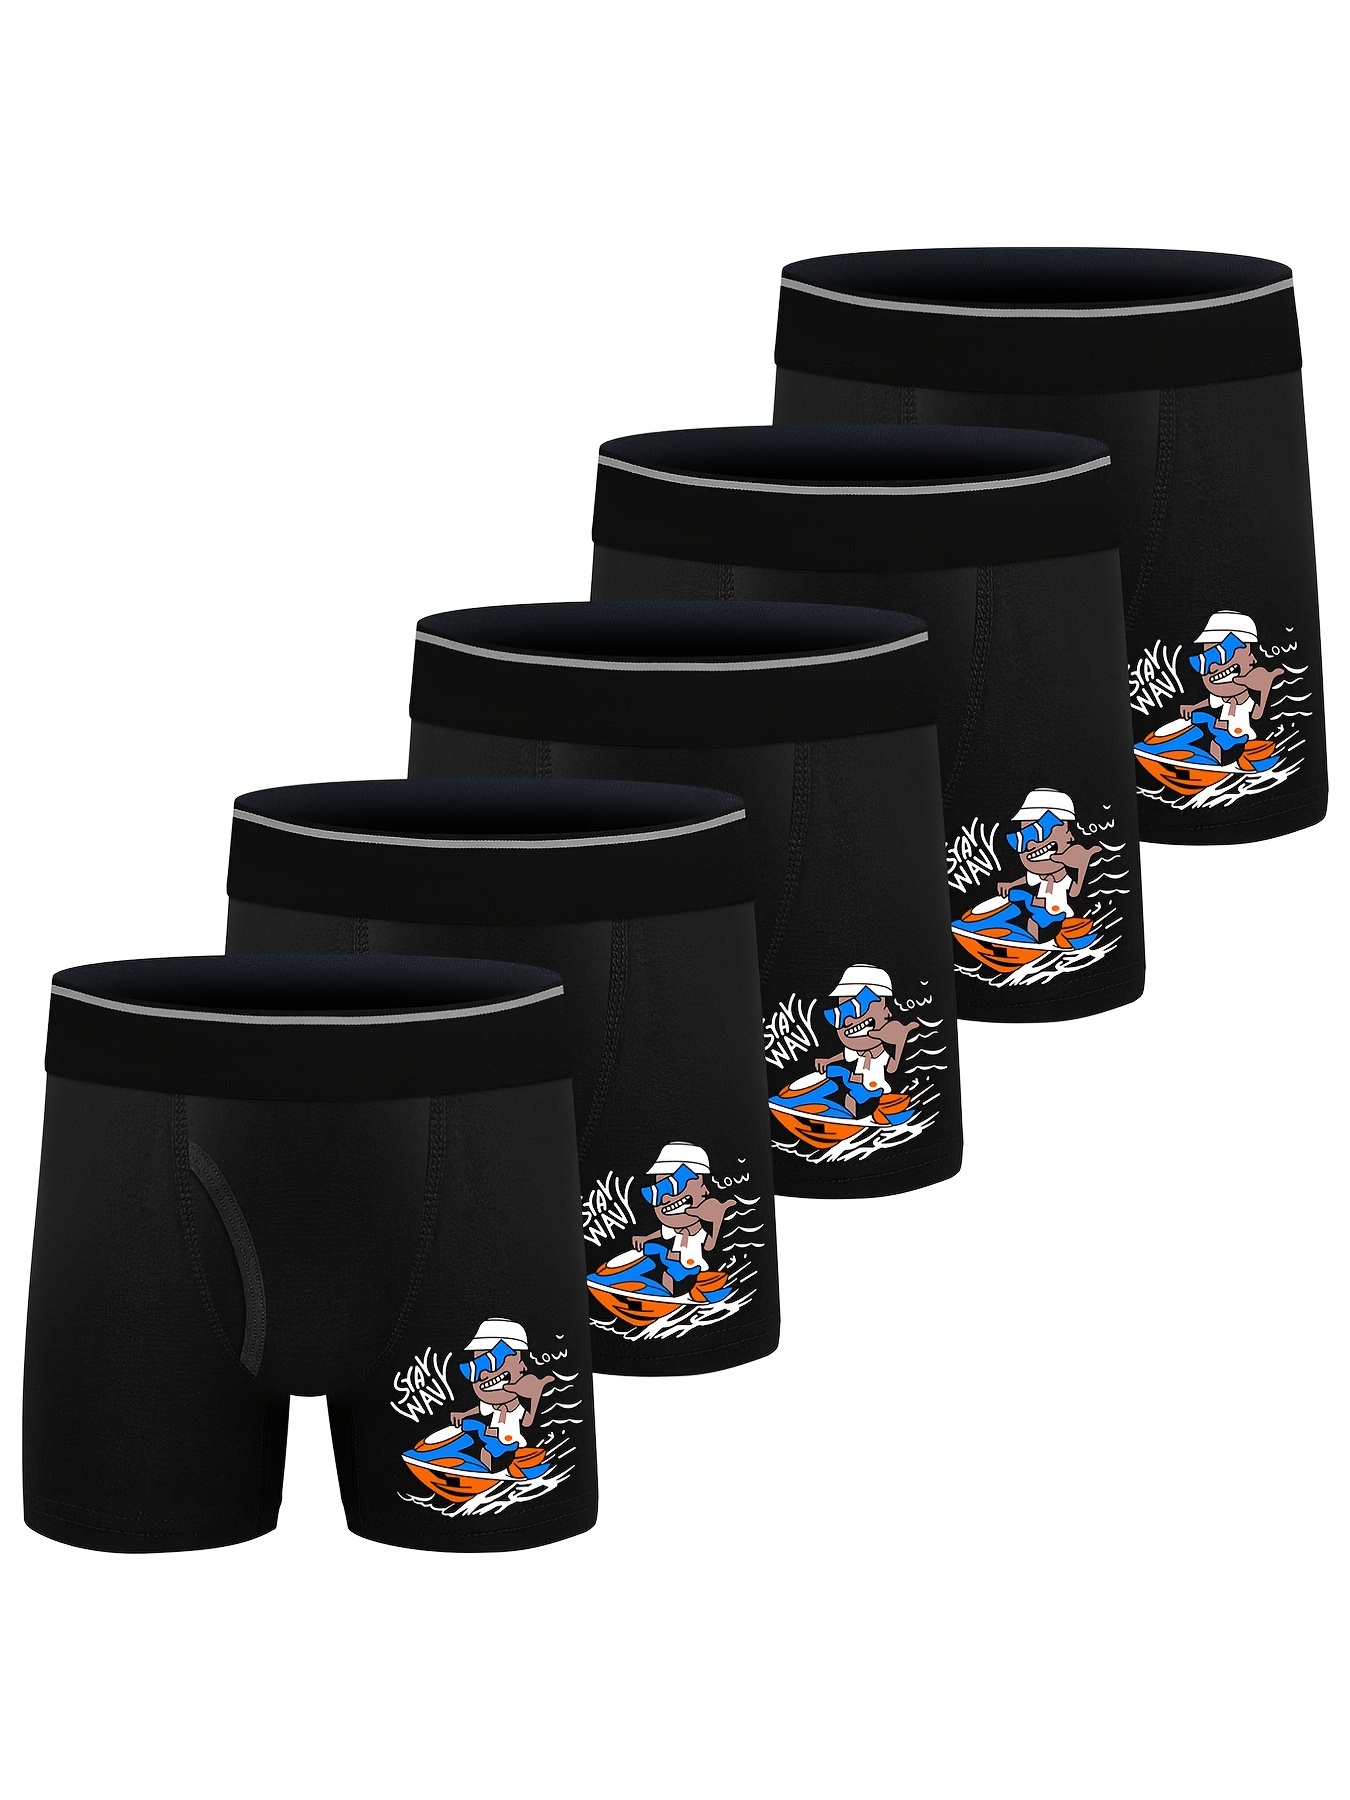 Sonic The Hedgehog Underwear Kids Large Size 10 Boxer Briefs 3